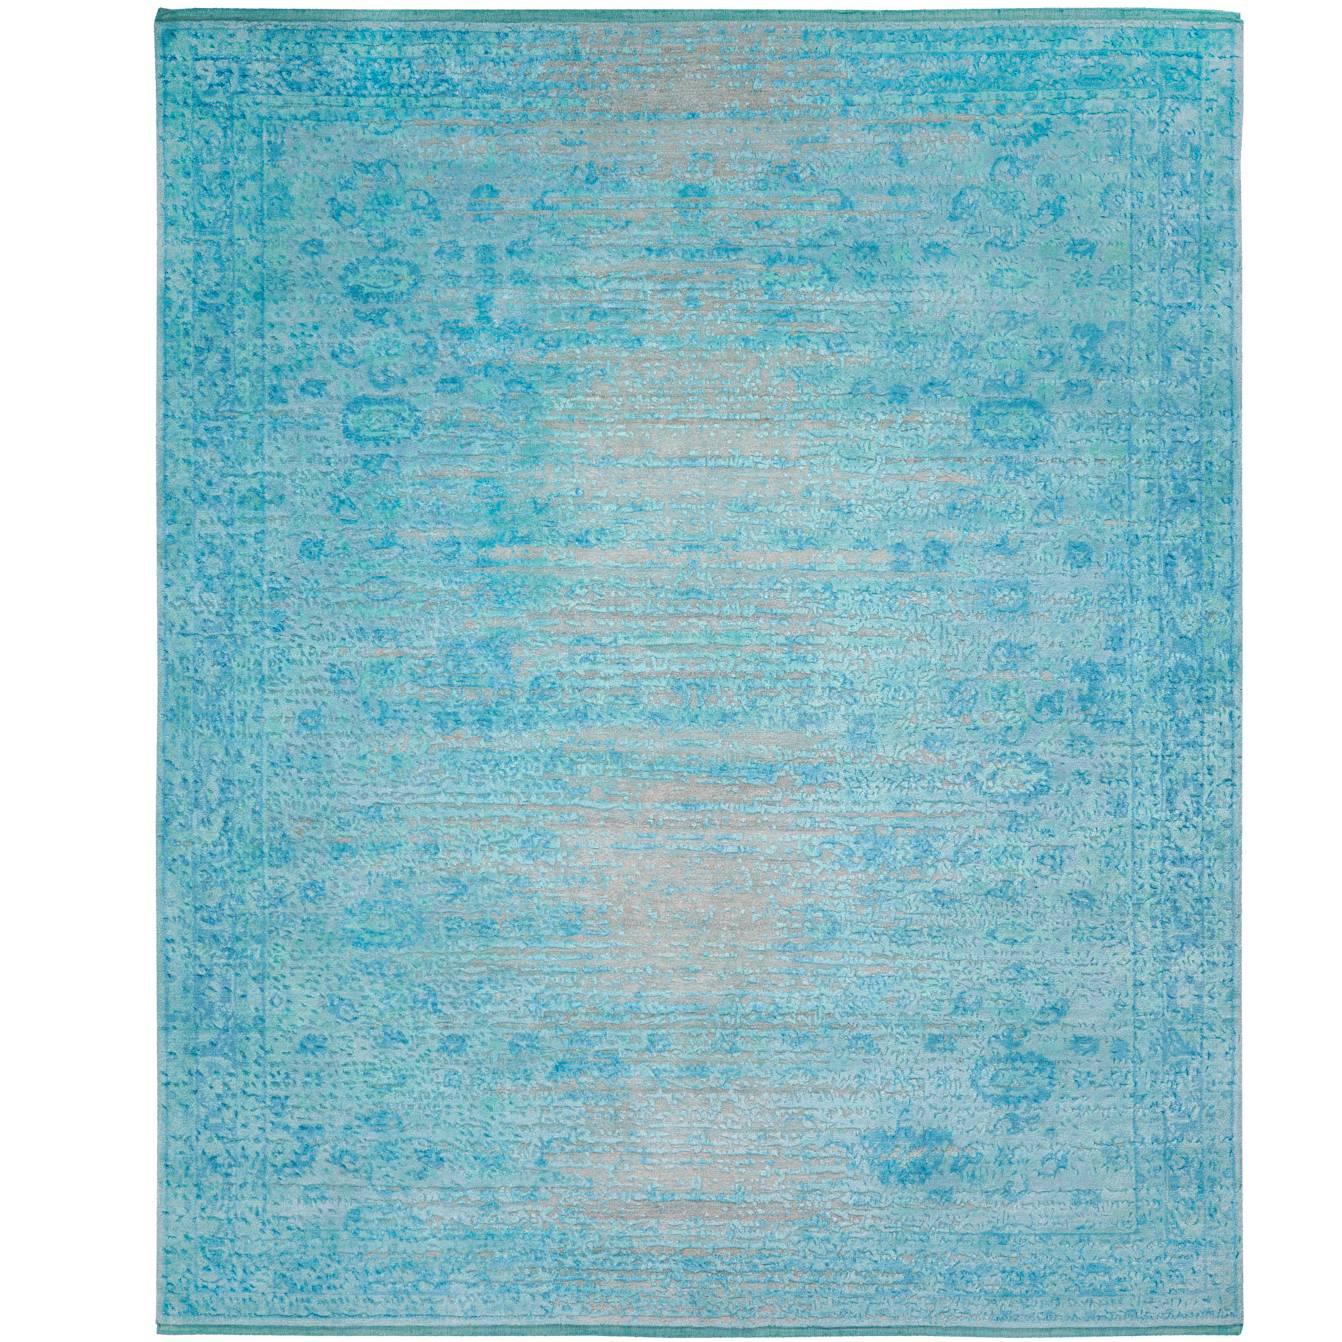 Bidjar Stomped Reverse Turquoise from Bidjar Carpet Collection by Jan Kath.  For Sale